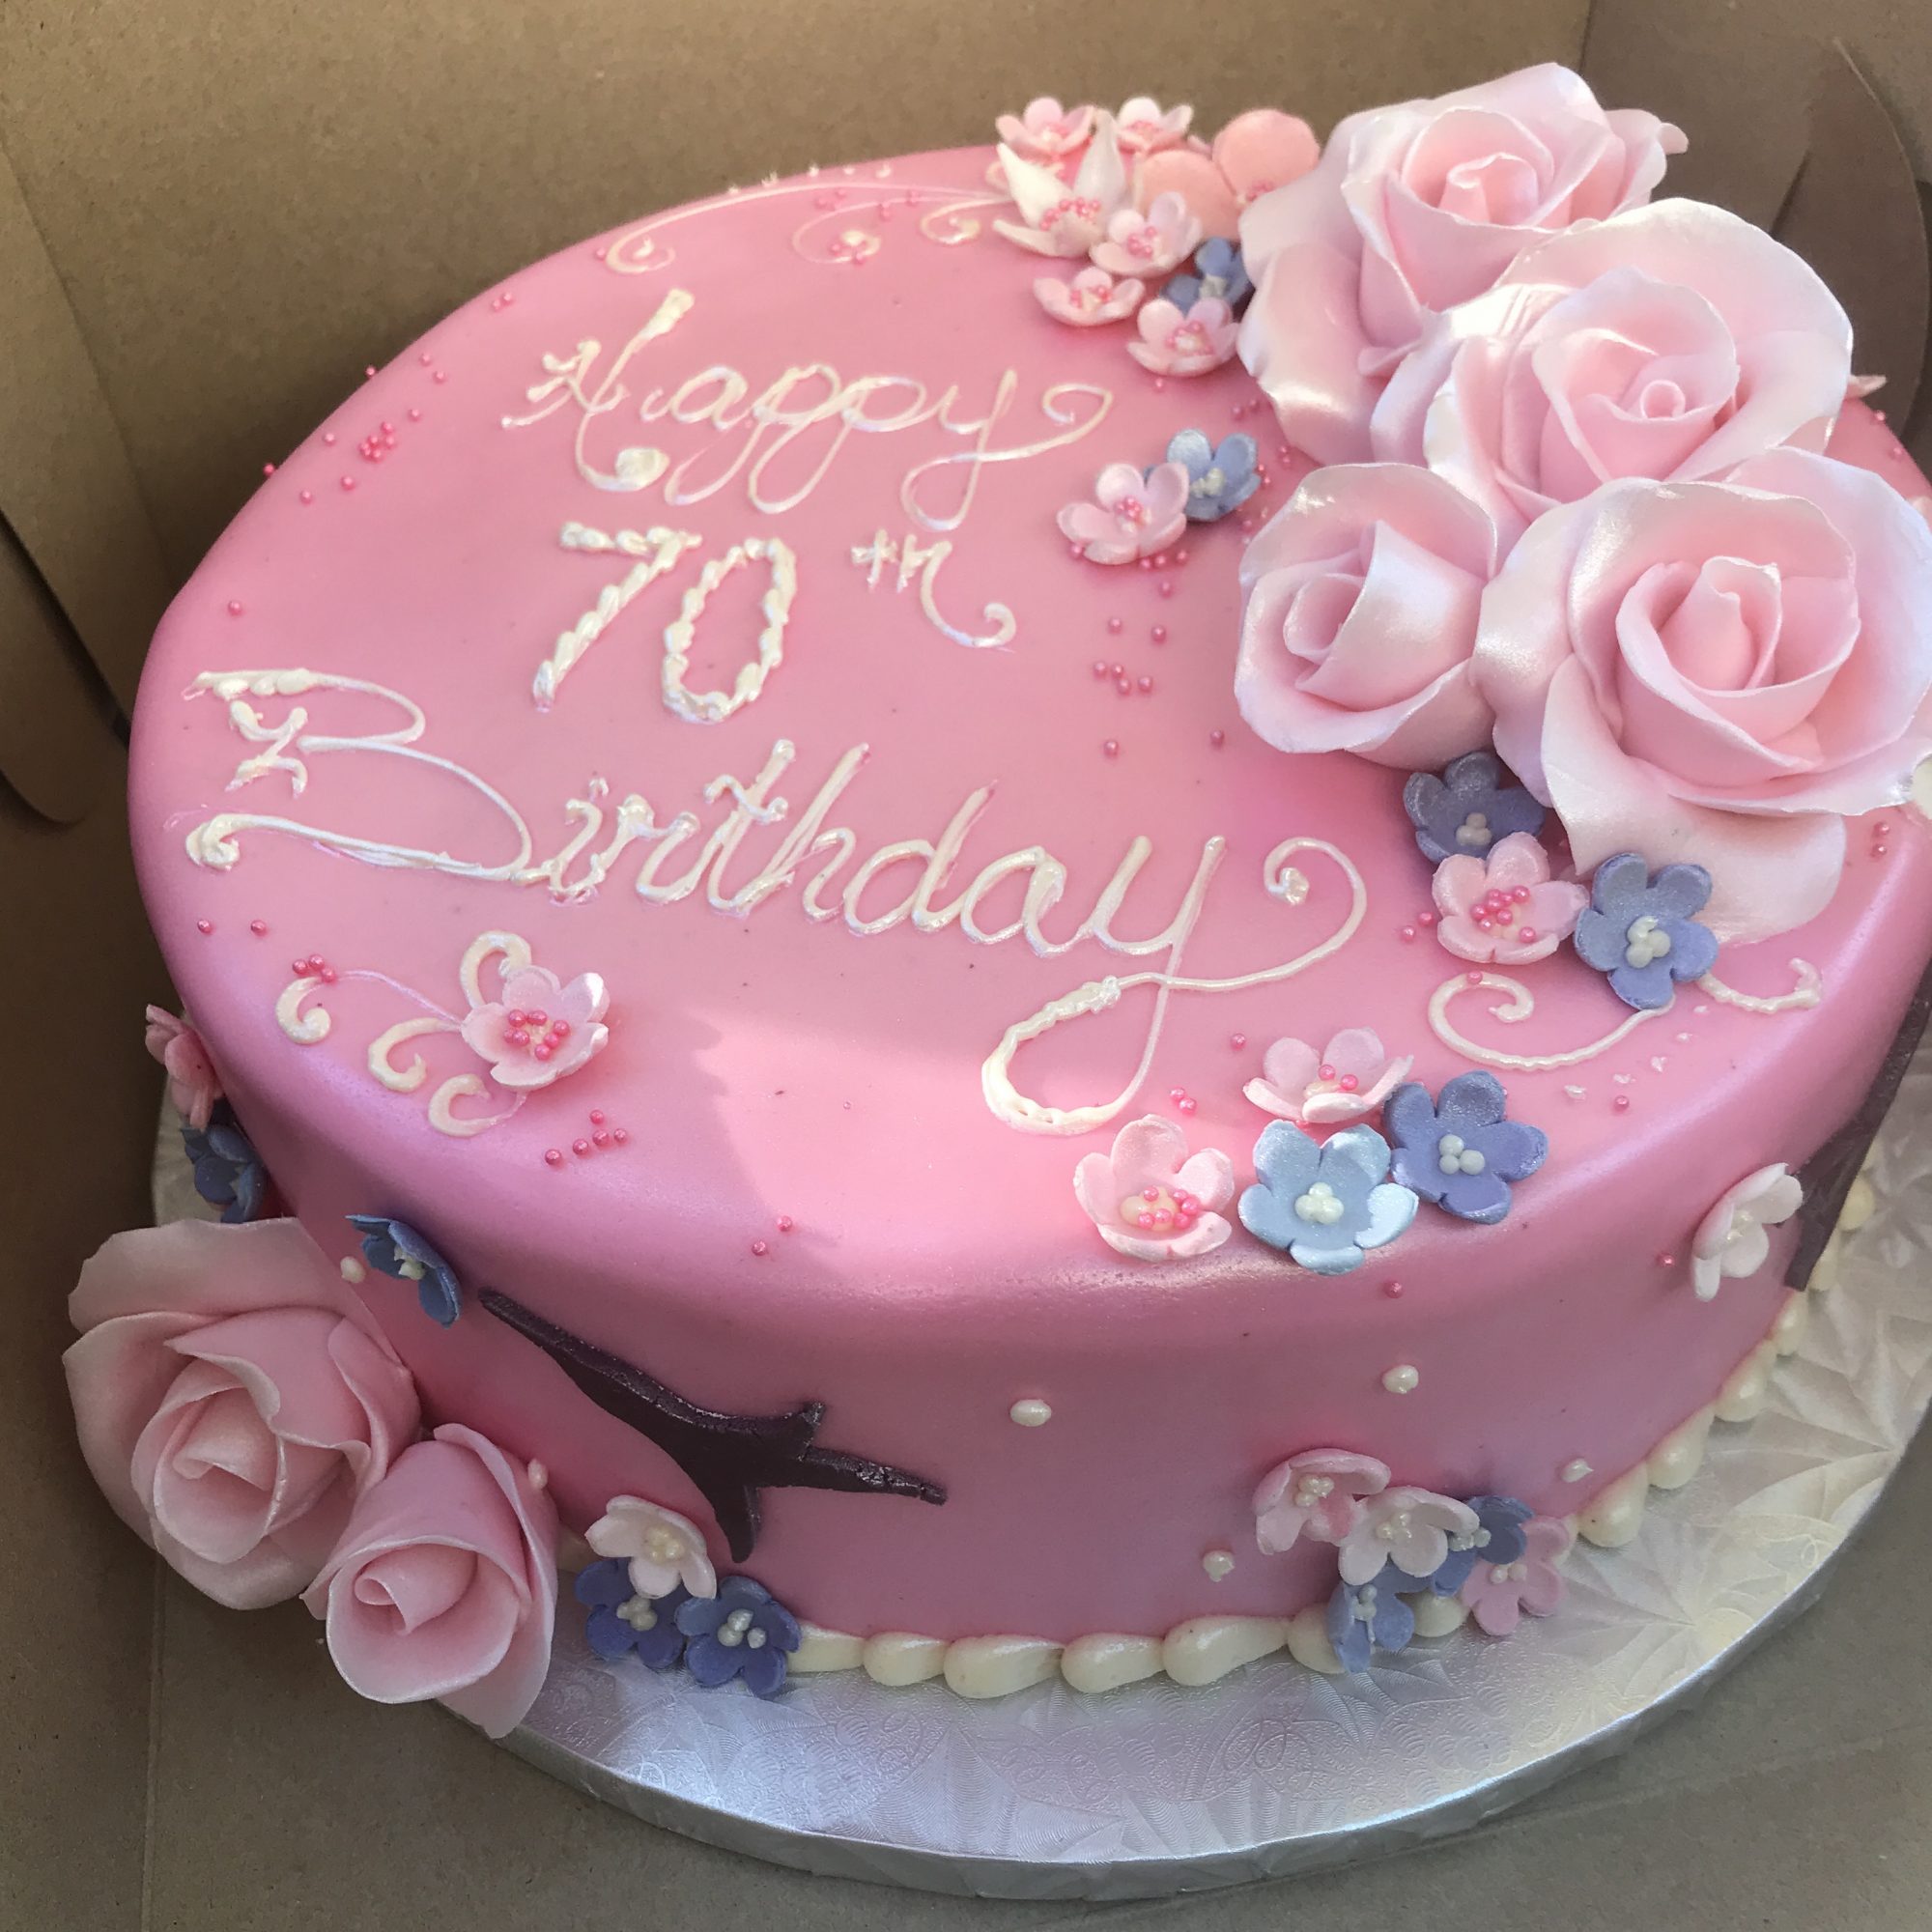 Pretty pink birthday cake